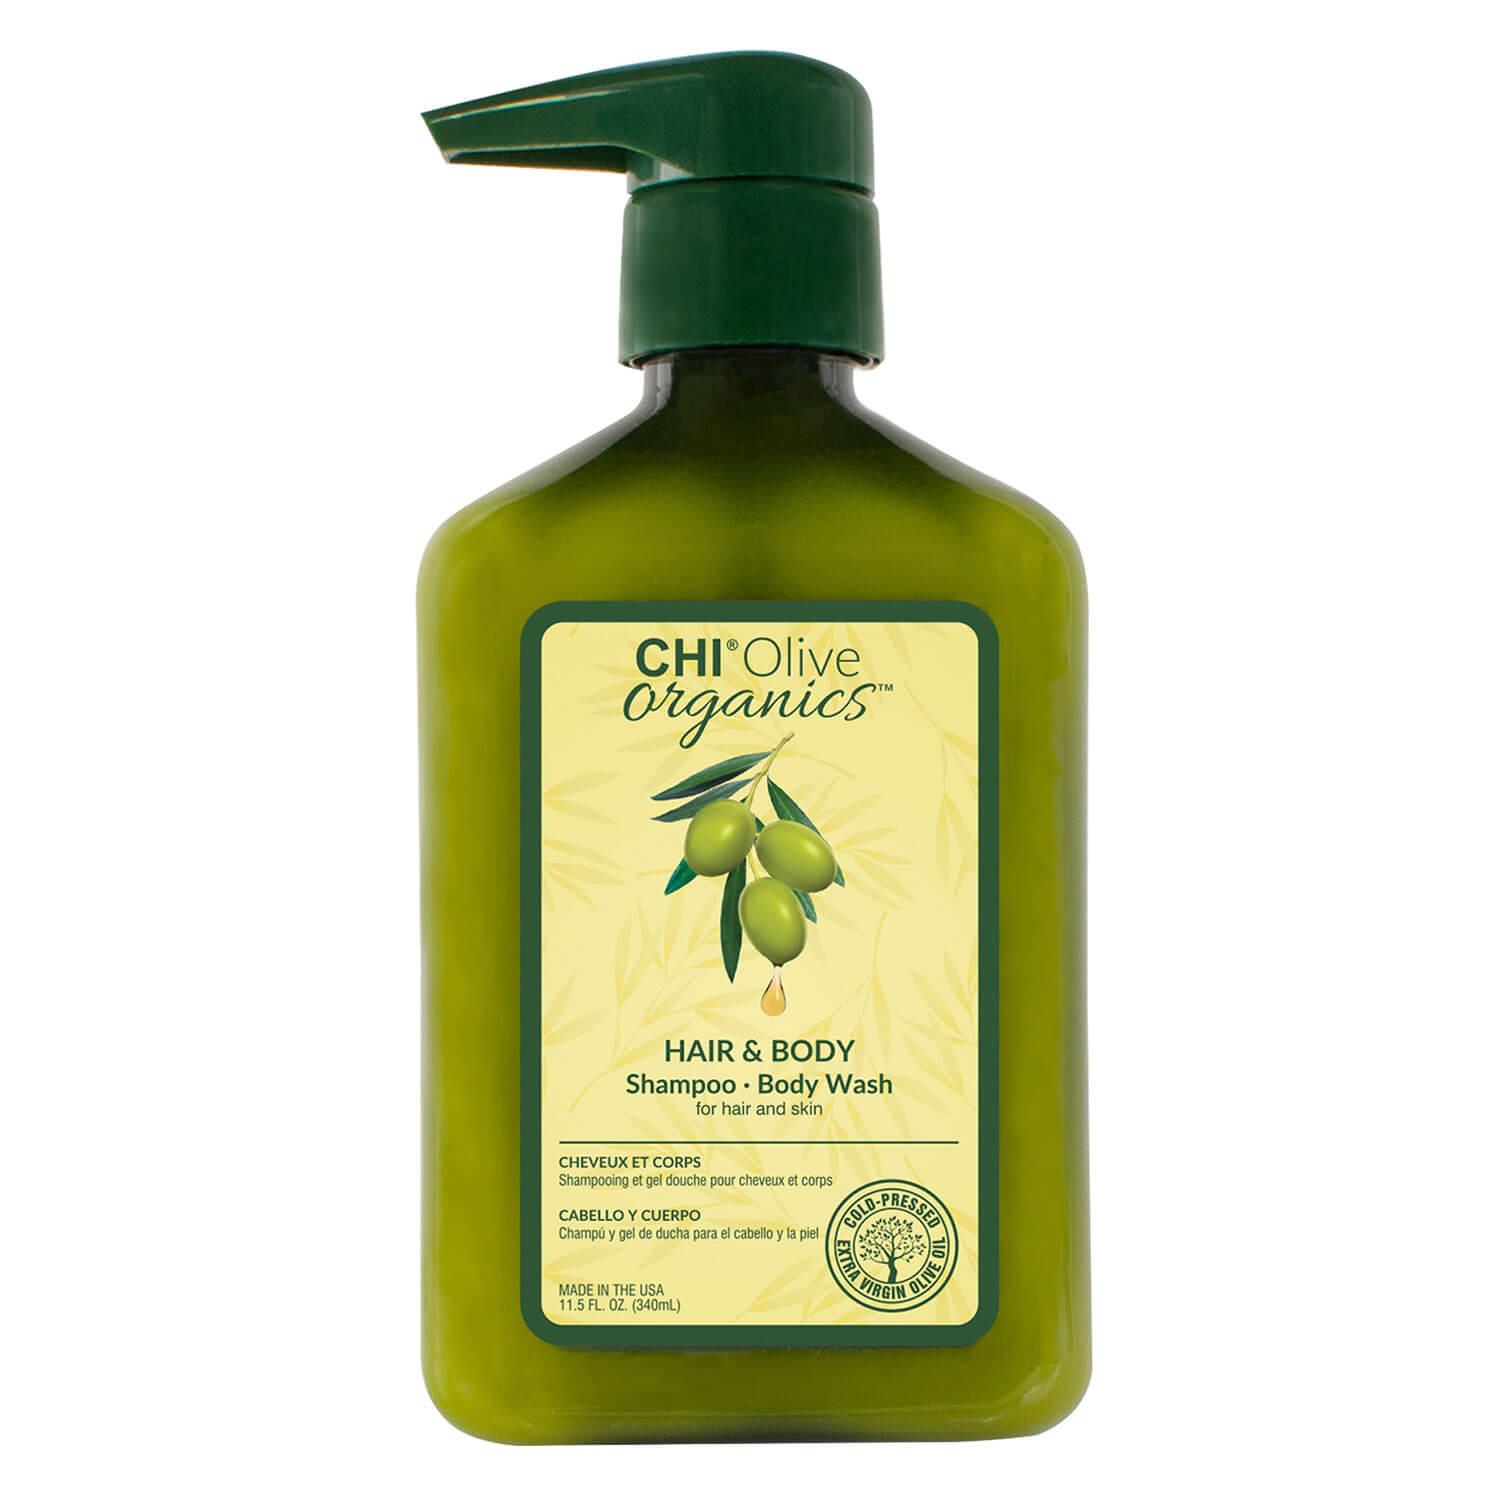 CHI Olive Organics - Hair & Body Shampoo